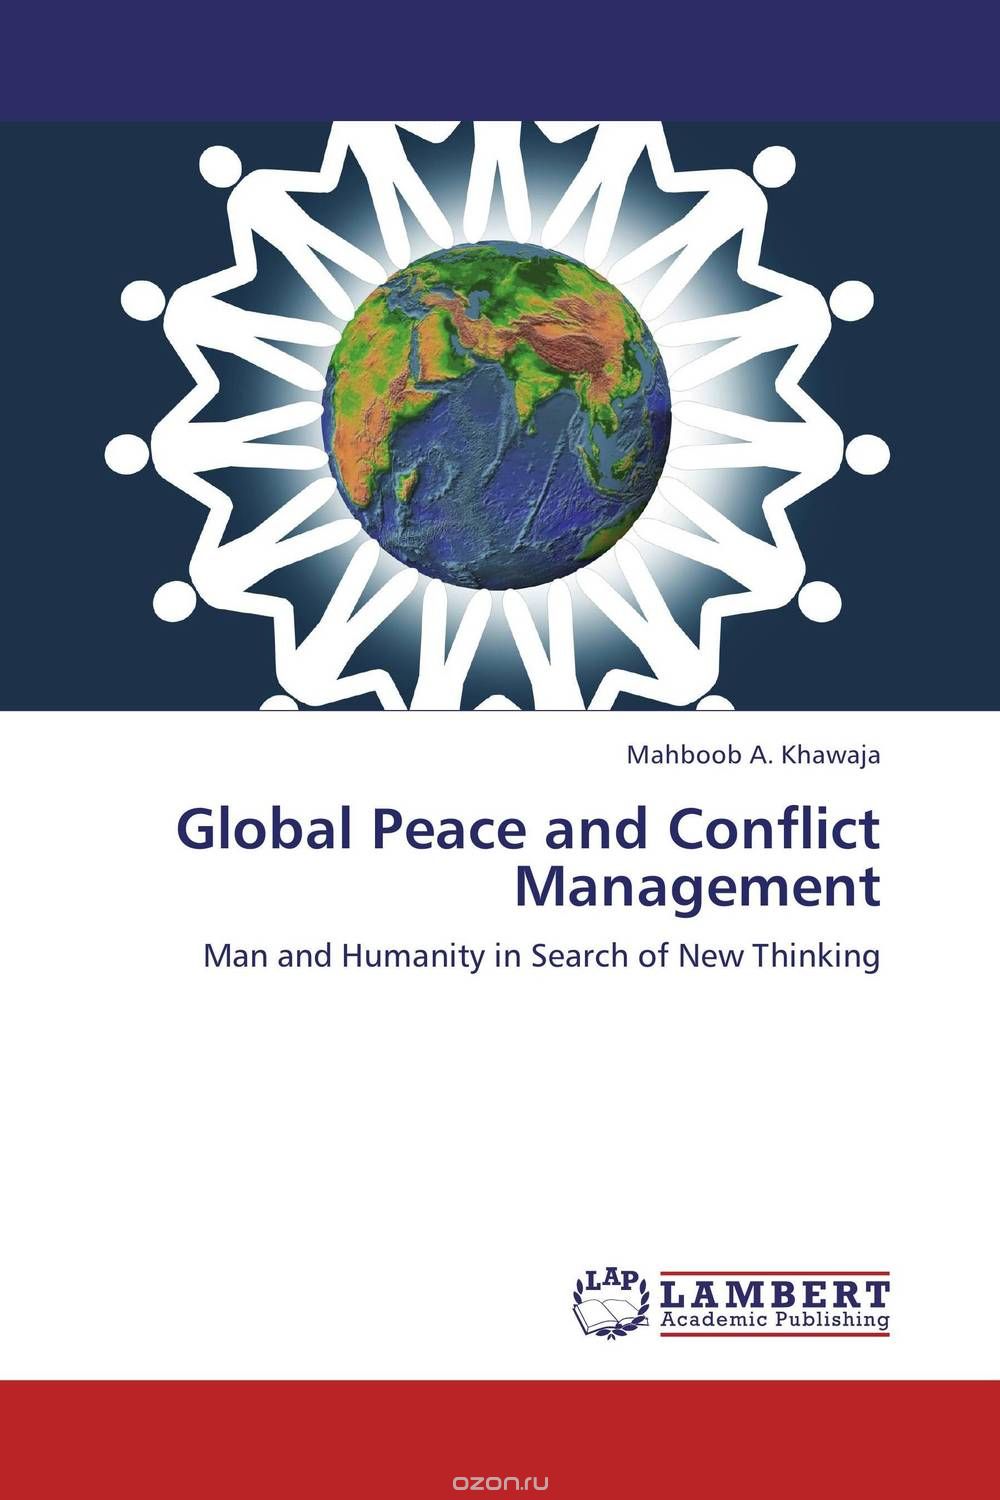 Скачать книгу "Global Peace and Conflict Management"